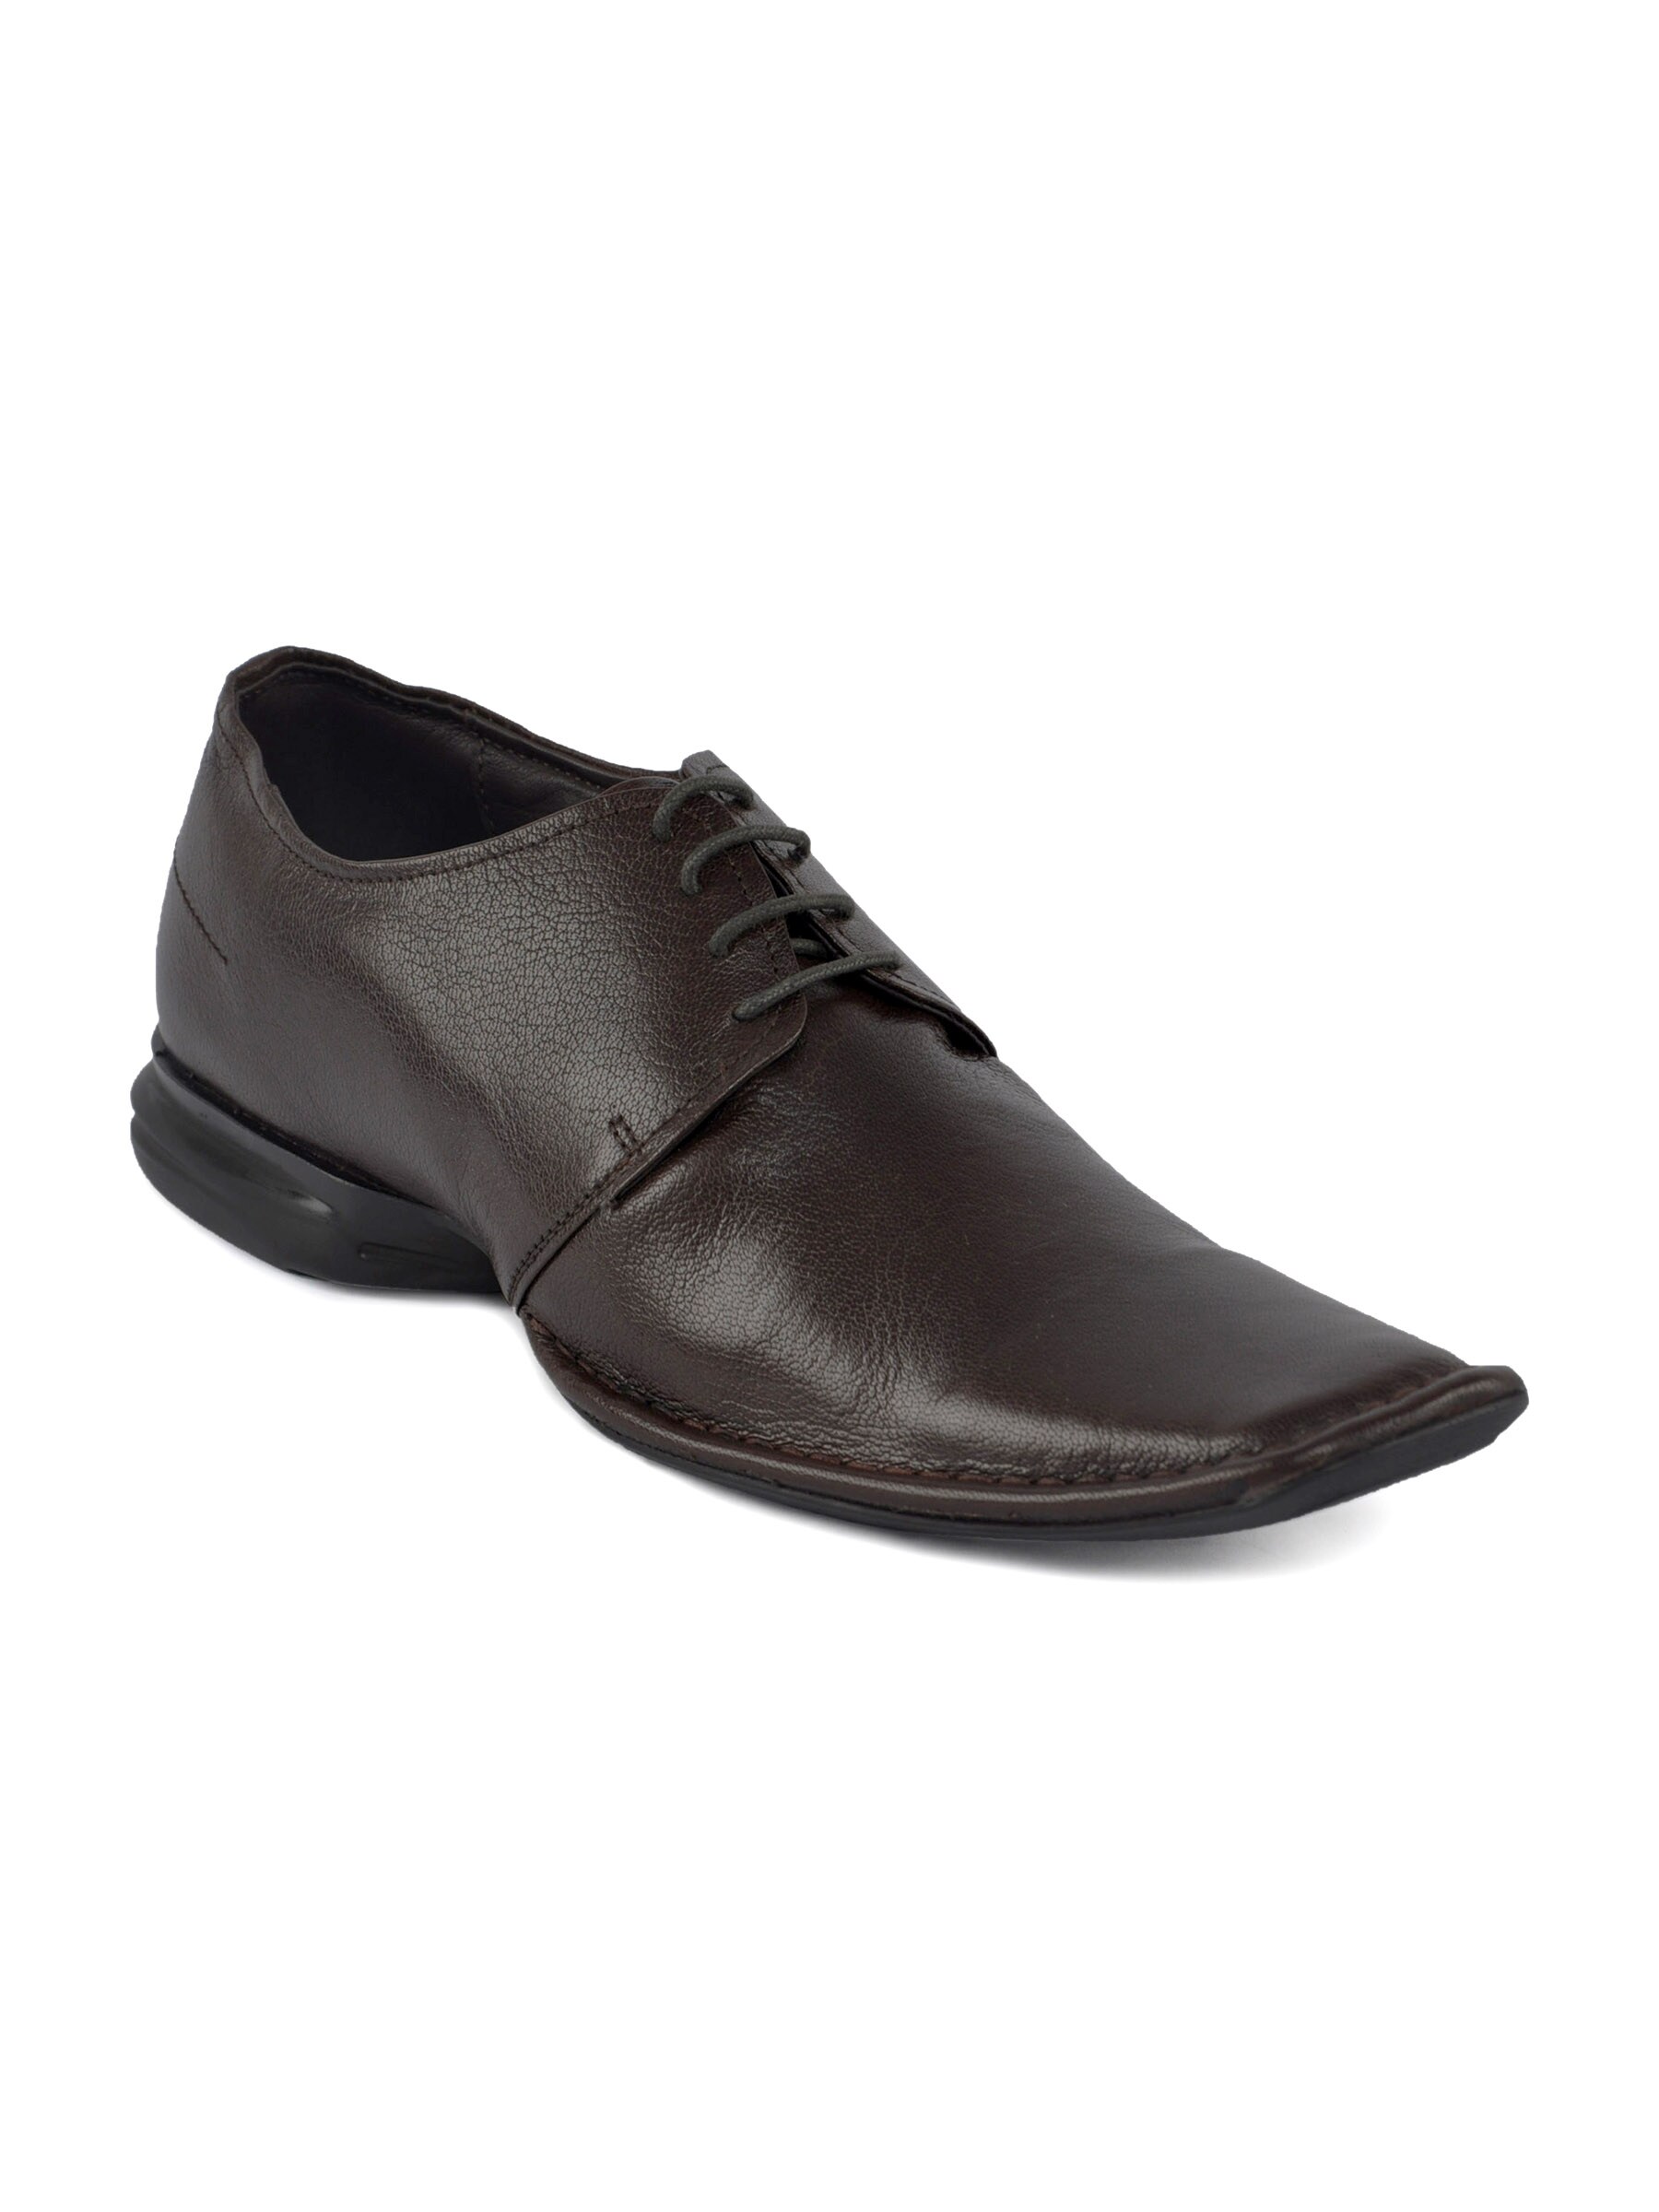 Franco Leone Men Brown Formal Shoe